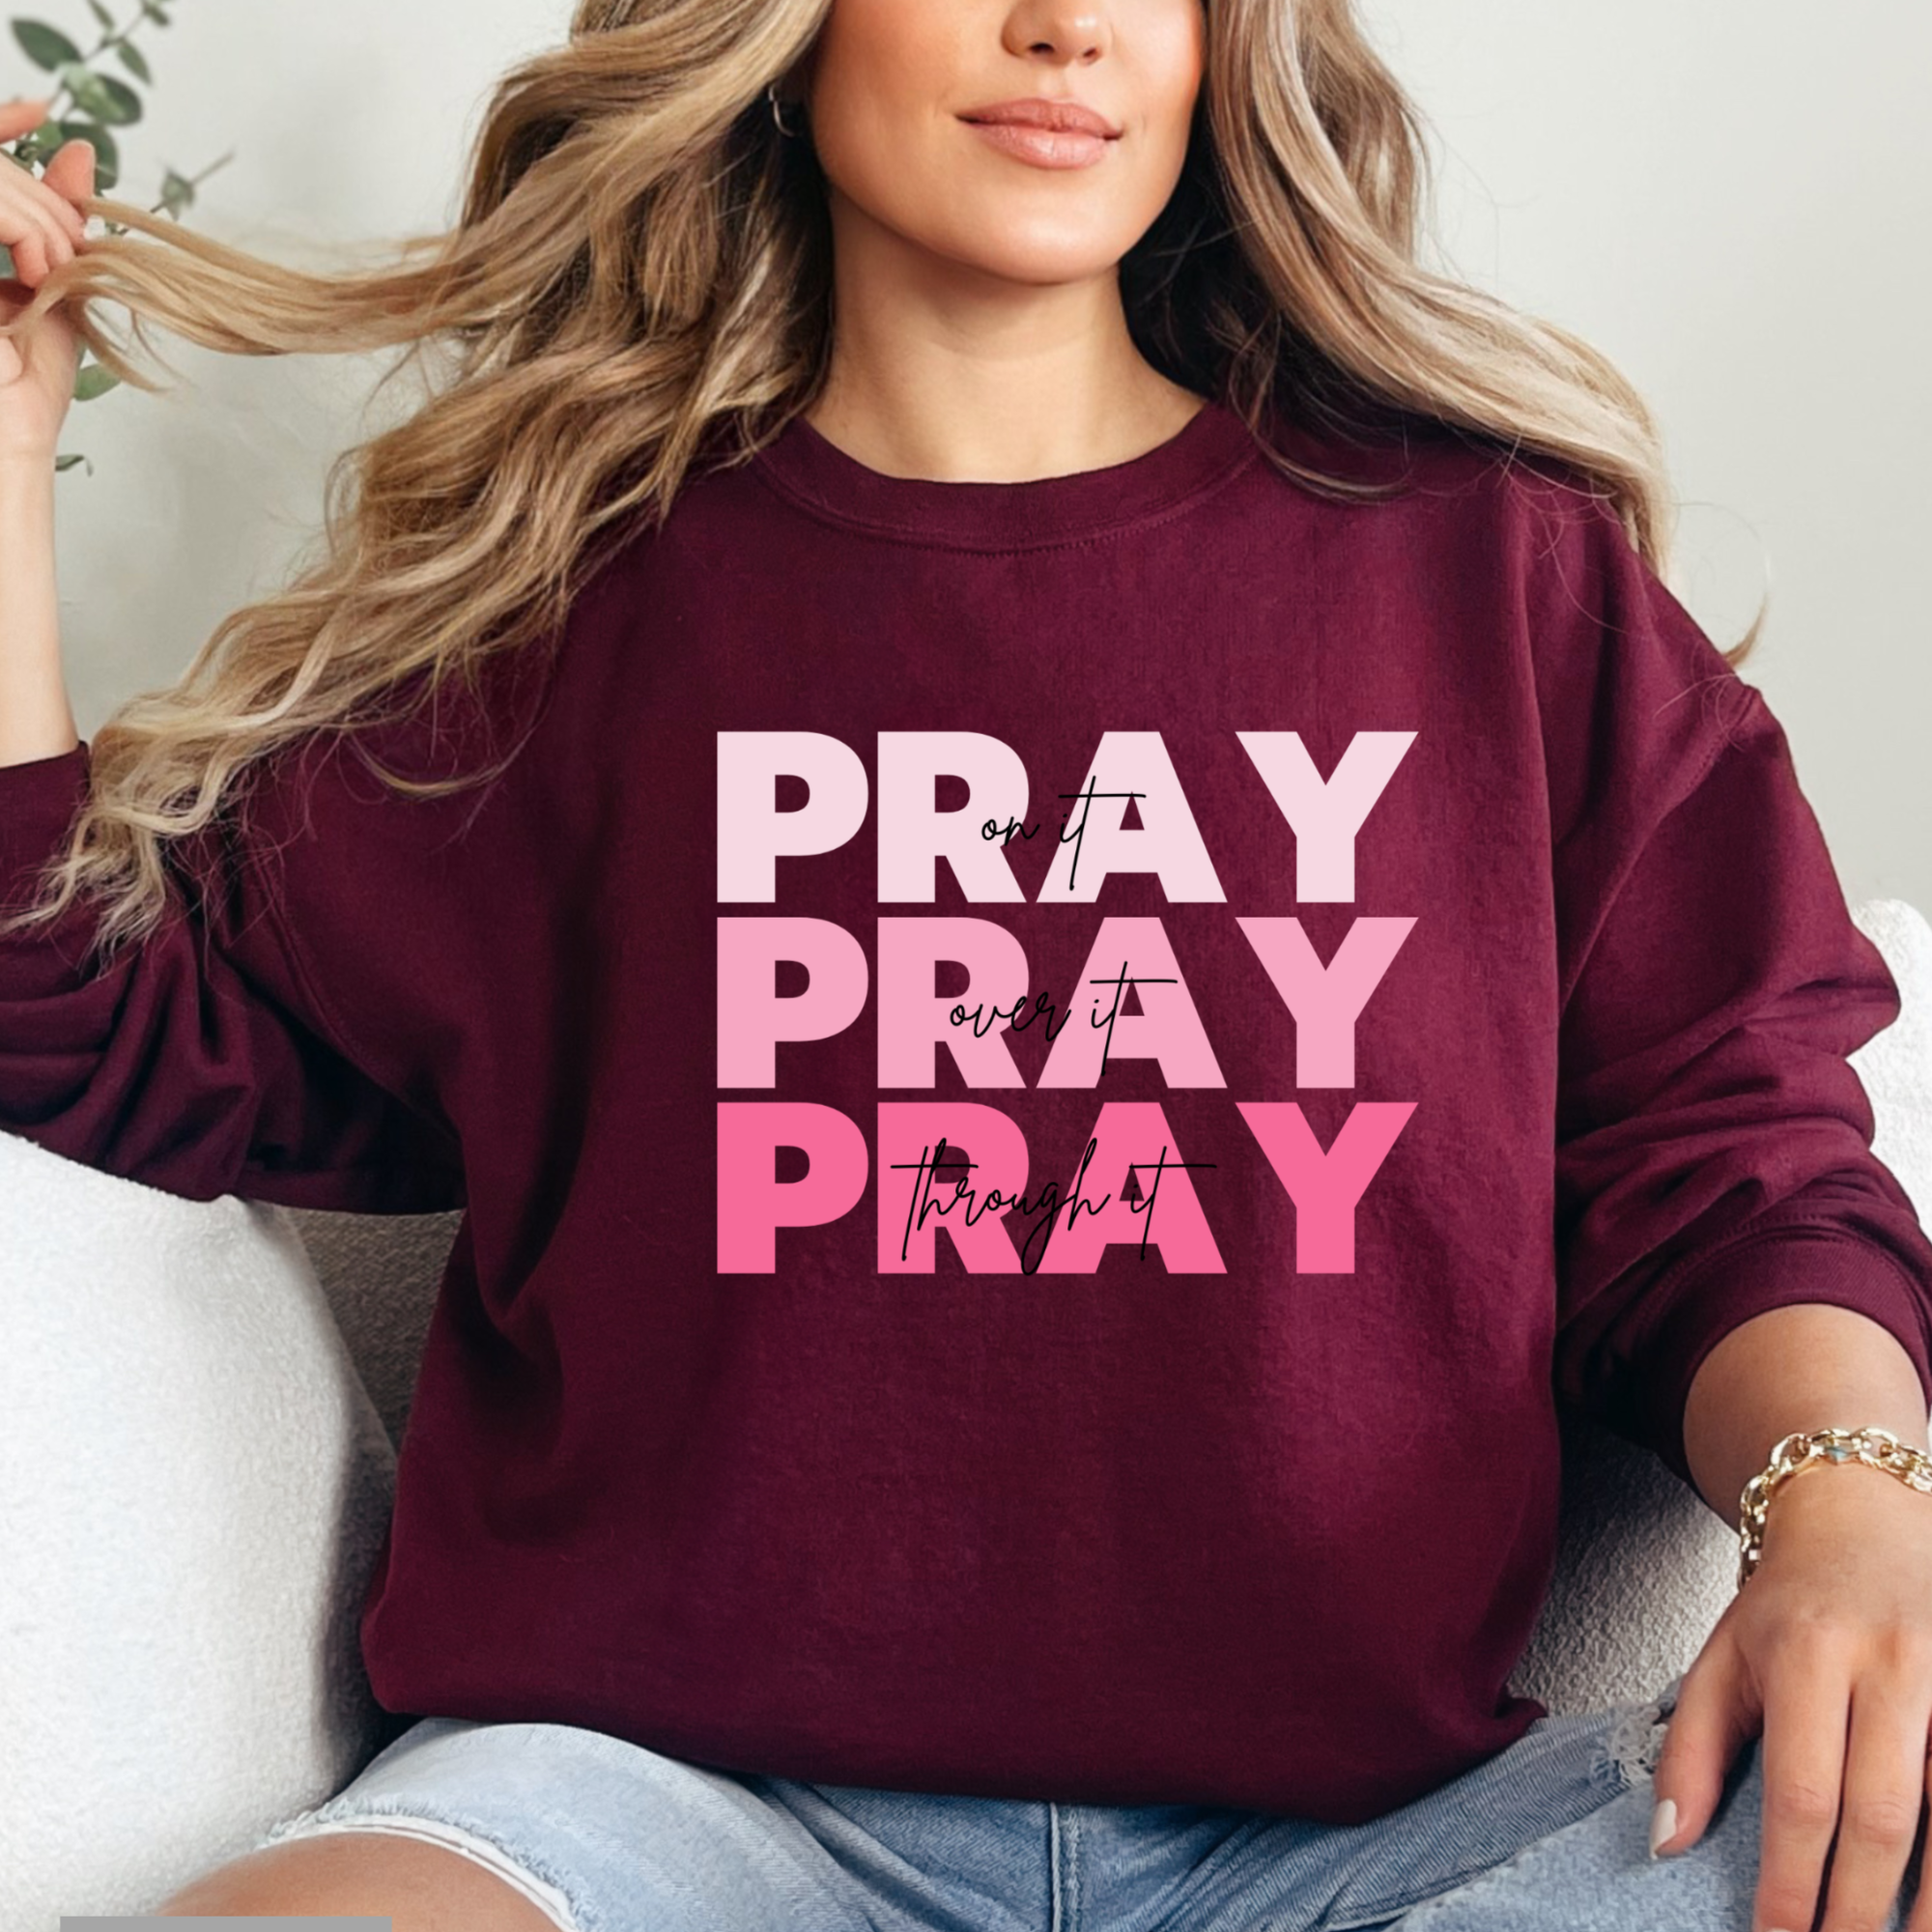 Pray On It Pray Over It Pray Through It Prayer Shirt - Faith Based Gift